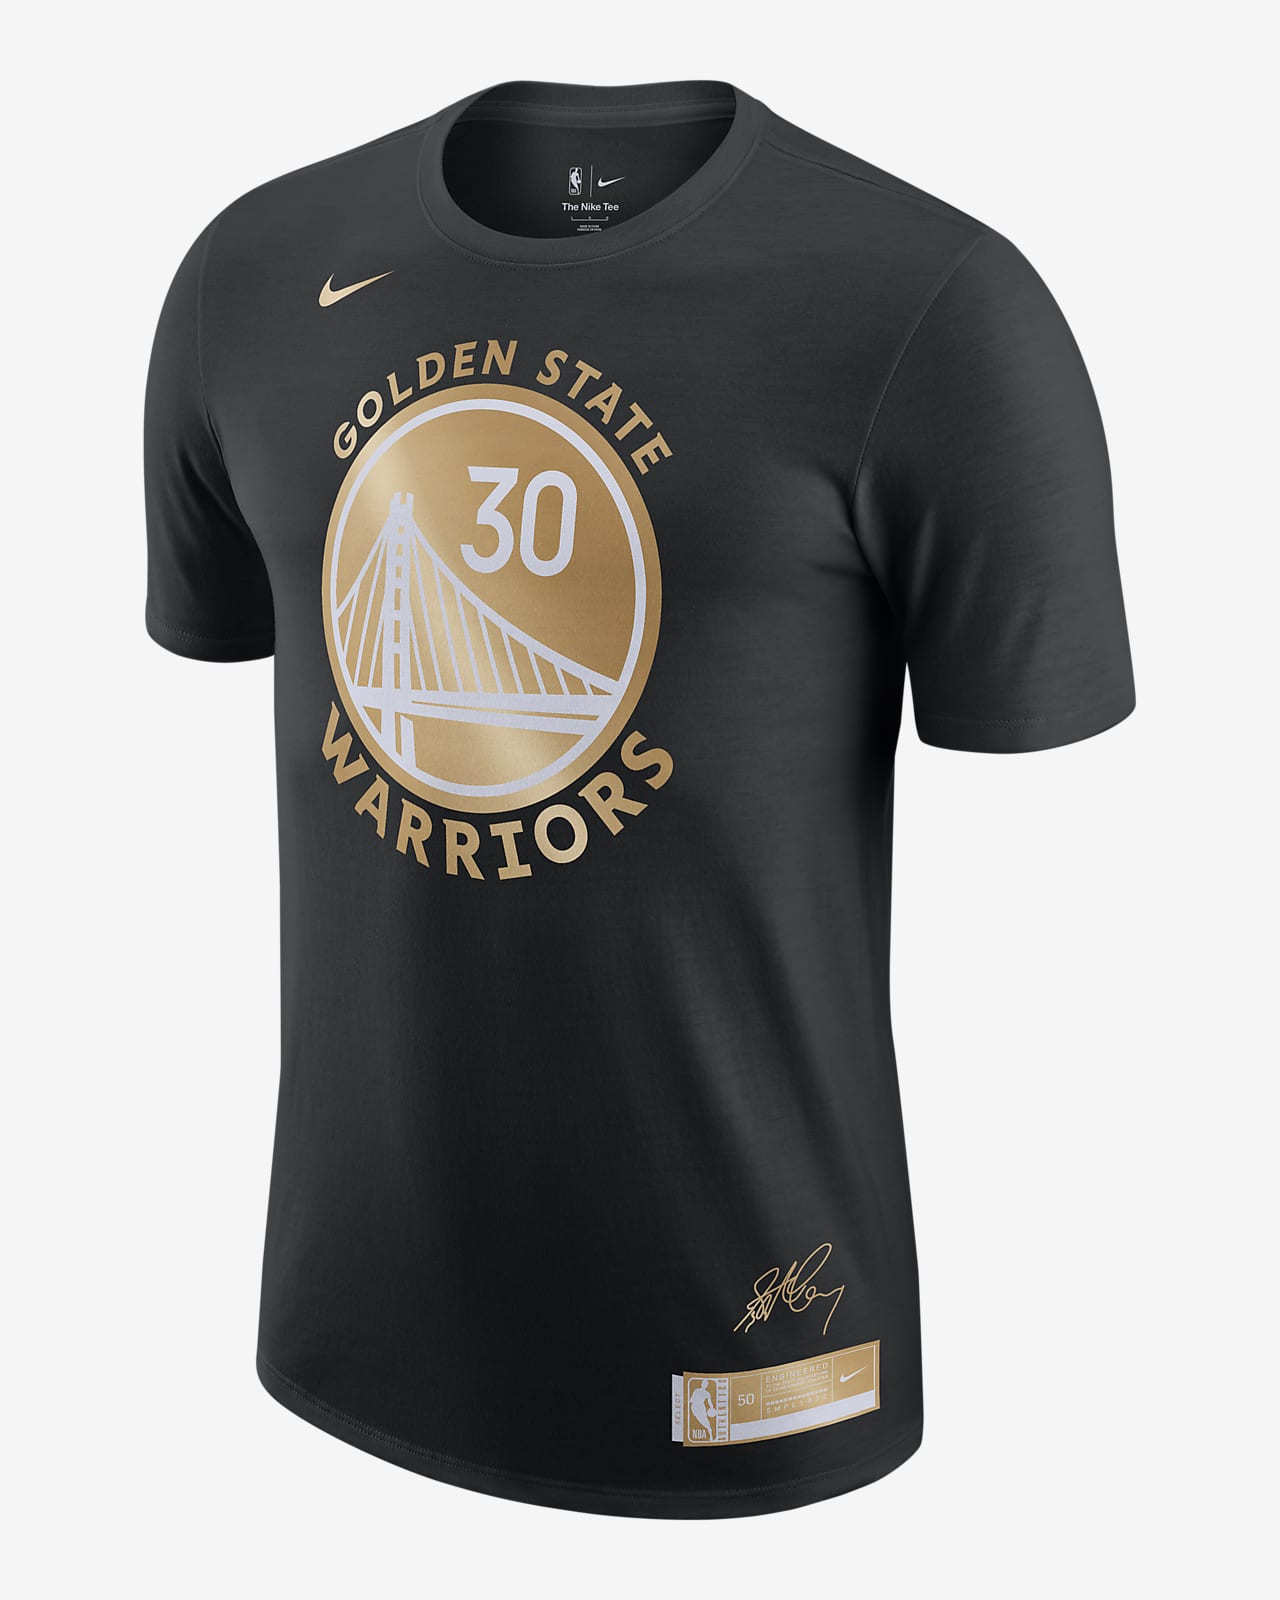 Playera Nike de la NBA para hombre Stephen Curry Select Series